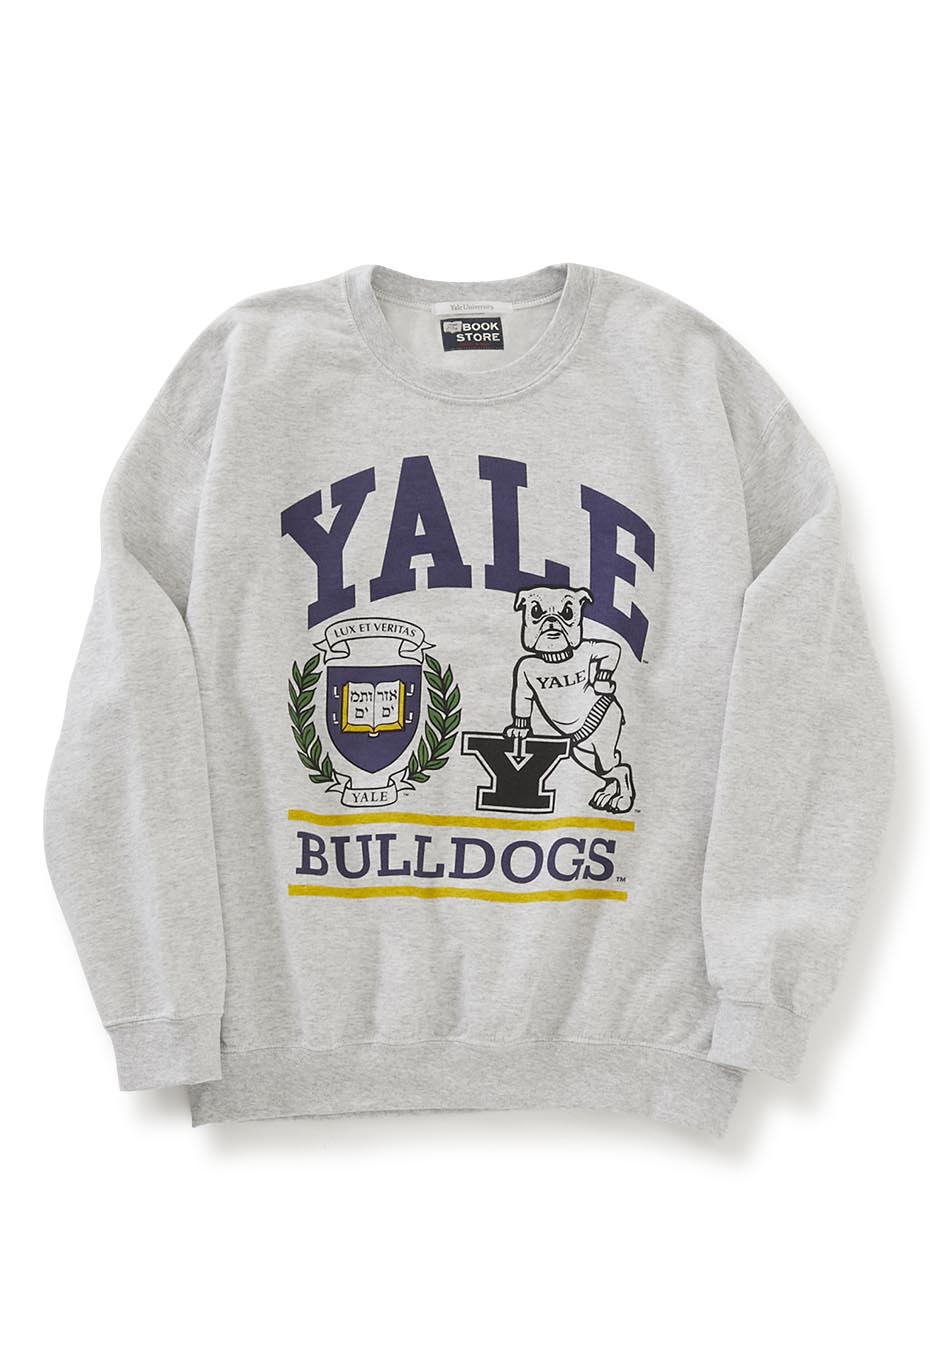 YALE Bulldog crew neck sweatshirt